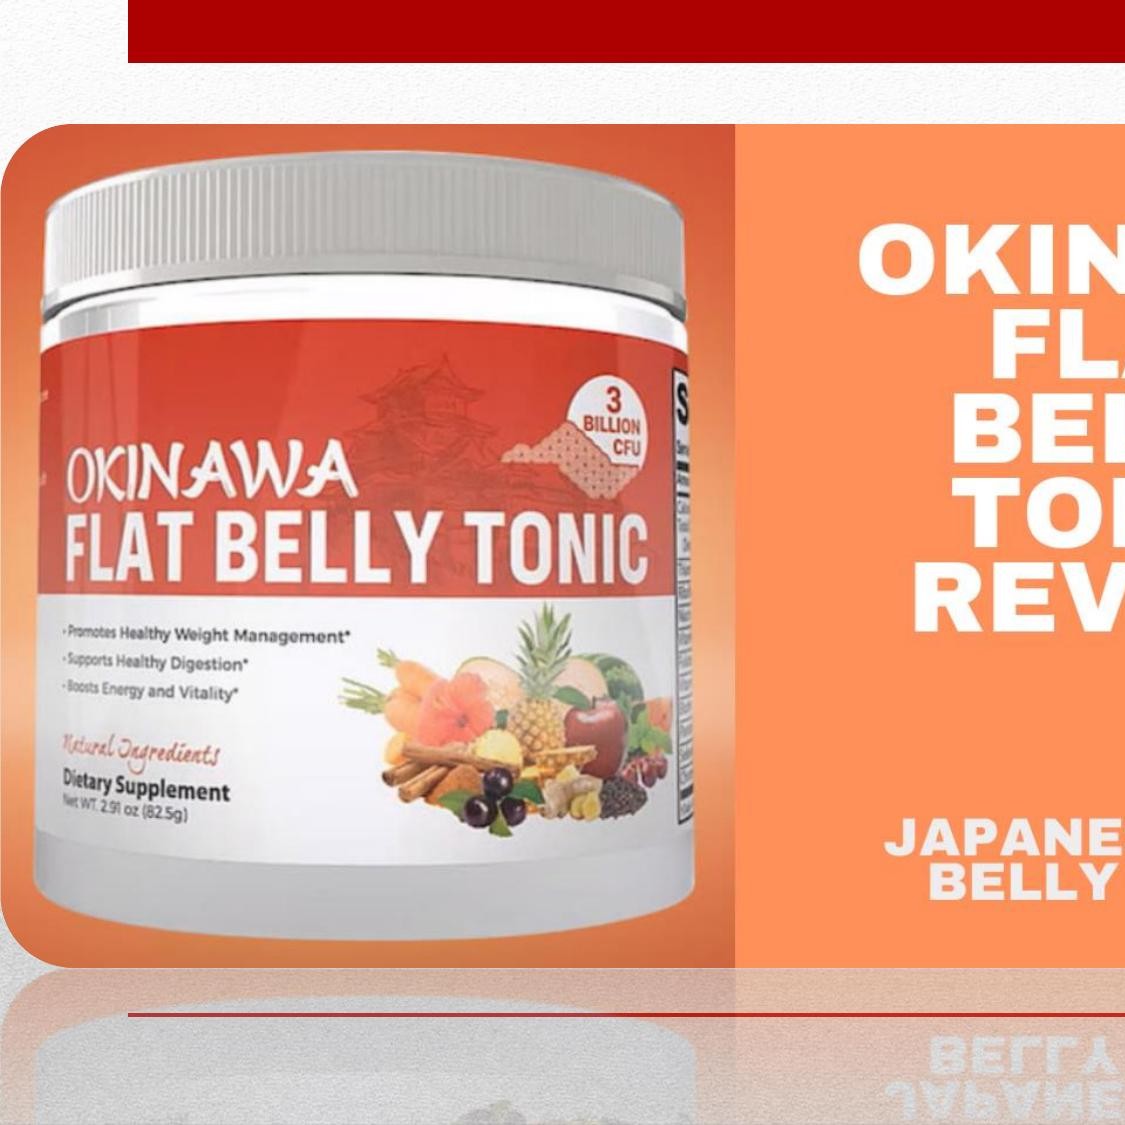 okinawa flat belly tonic reviews 2021